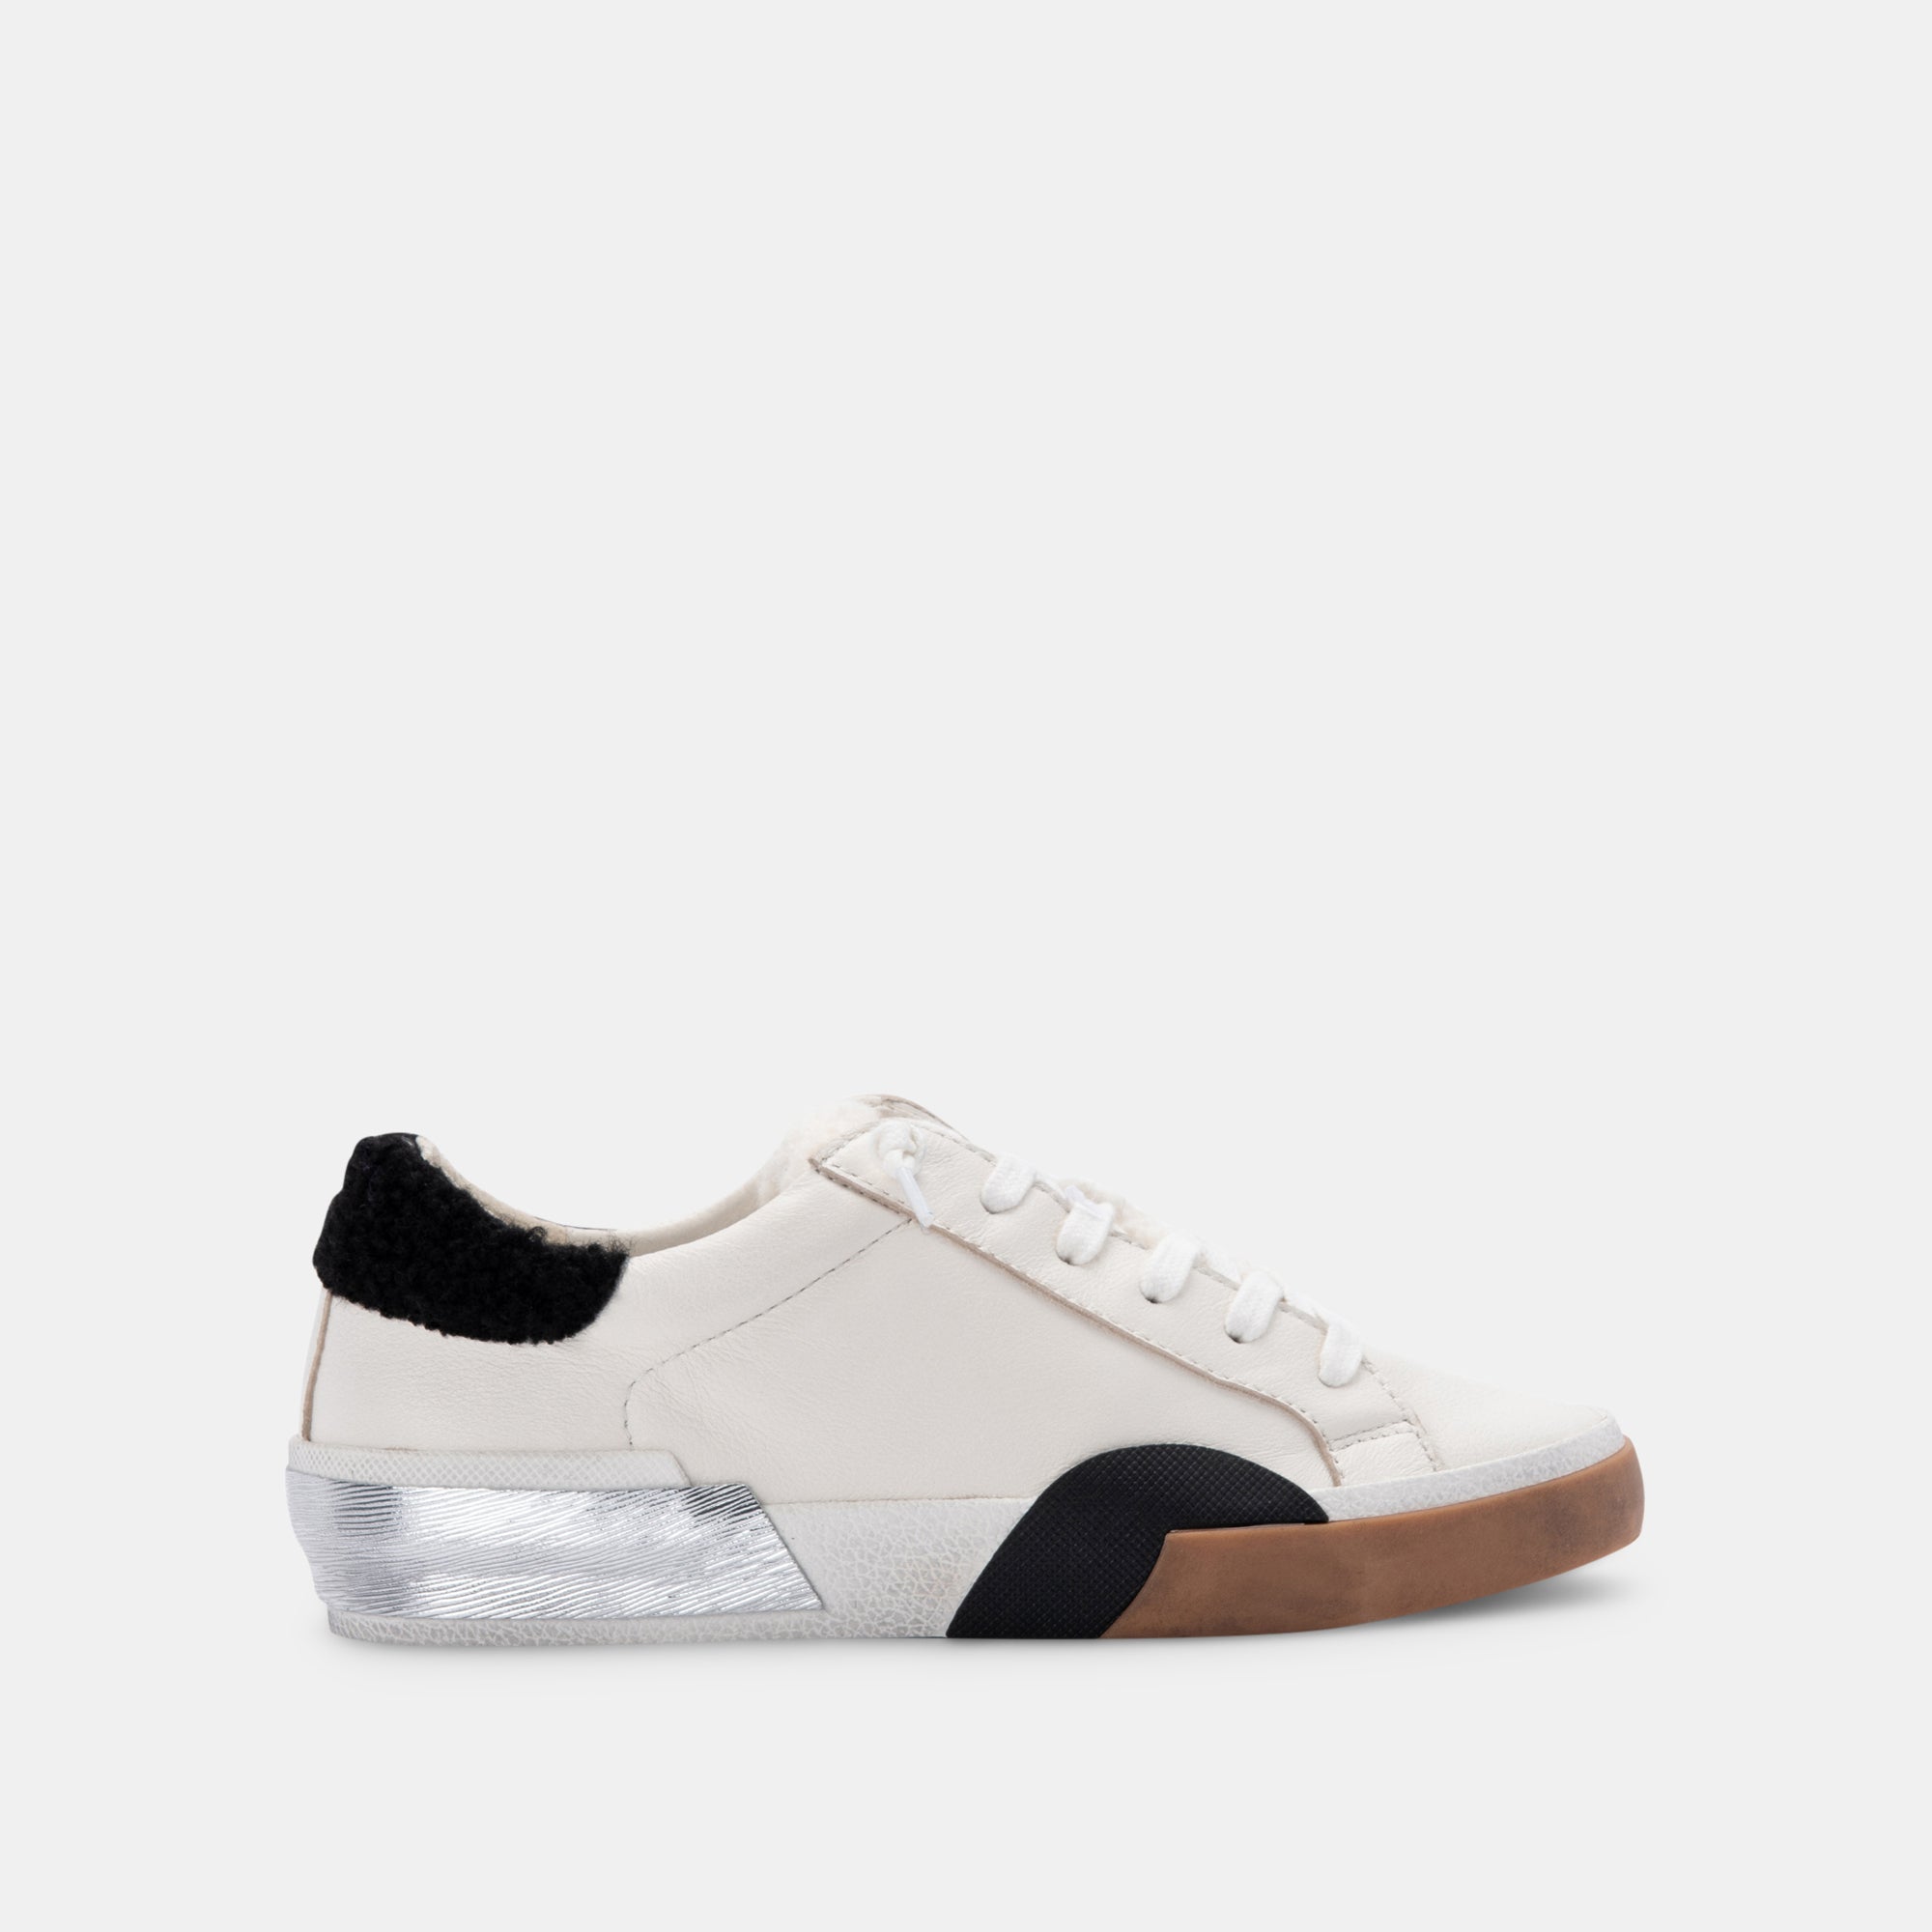 Dolce Vita Zina Plush Sneaker, Size 9 - White/ Black Leather at Nordstrom Rack